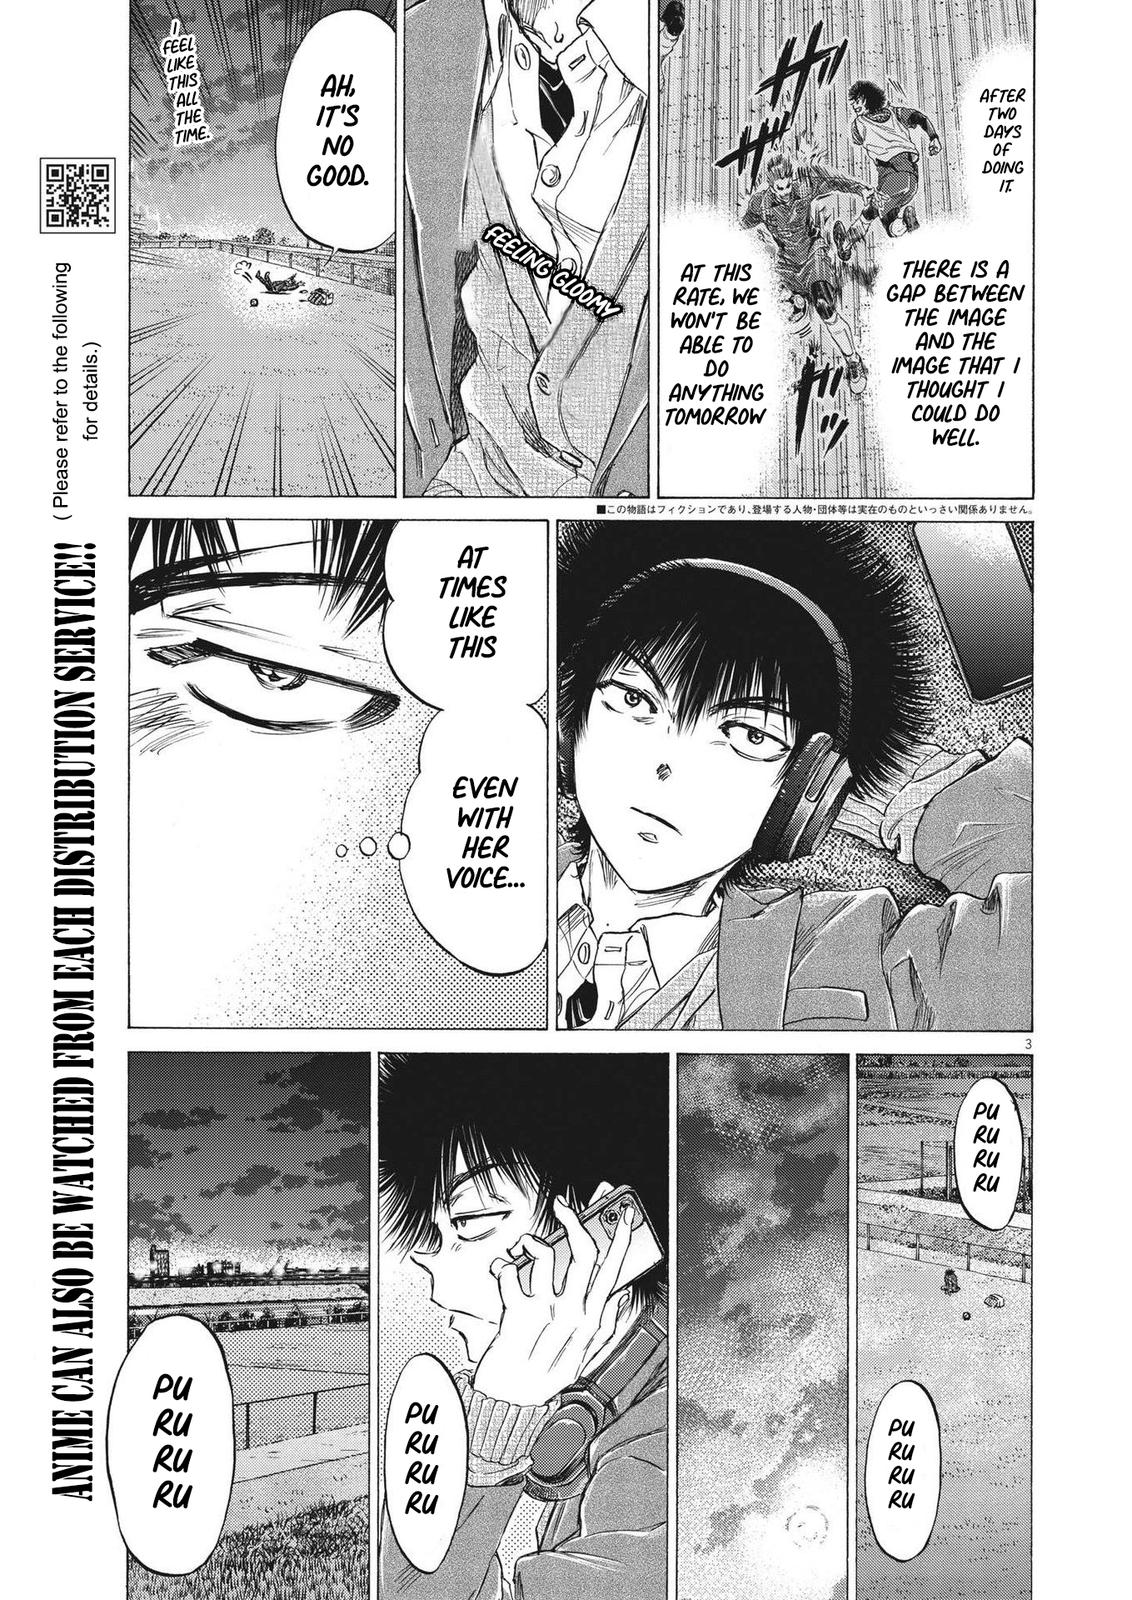 Ao Ashi, Chapter 351  TcbScans Net - TCBscans - Free Manga Online